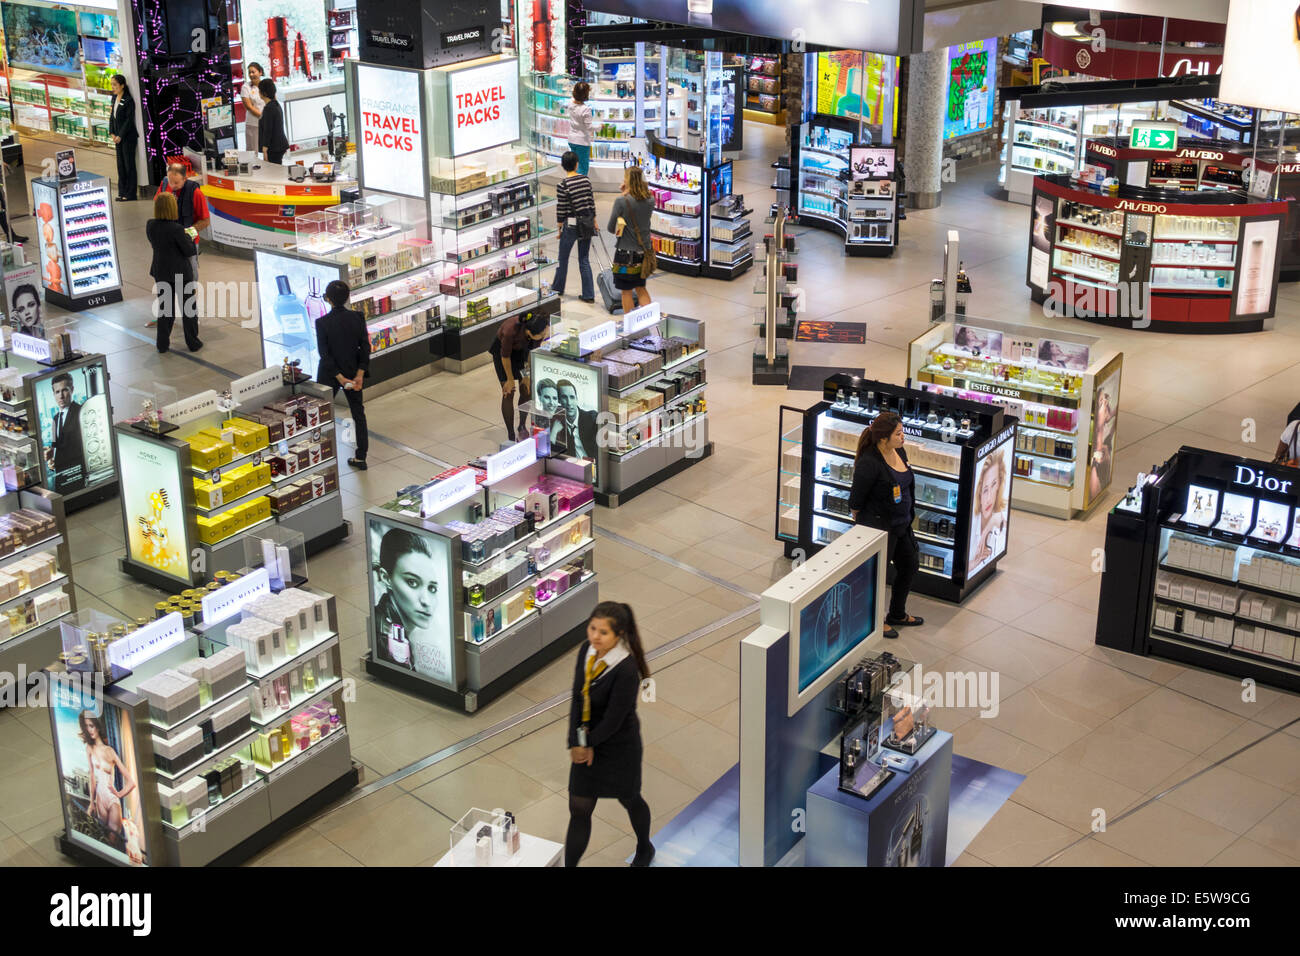 Sydney Australien, Kingsford-Smith Airport, SYD, innen, Terminal, Gate, Shopping Shopper Shopper shoppen Geschäfte Markt Märkte Marktplatz kaufen verkaufen Stockfoto